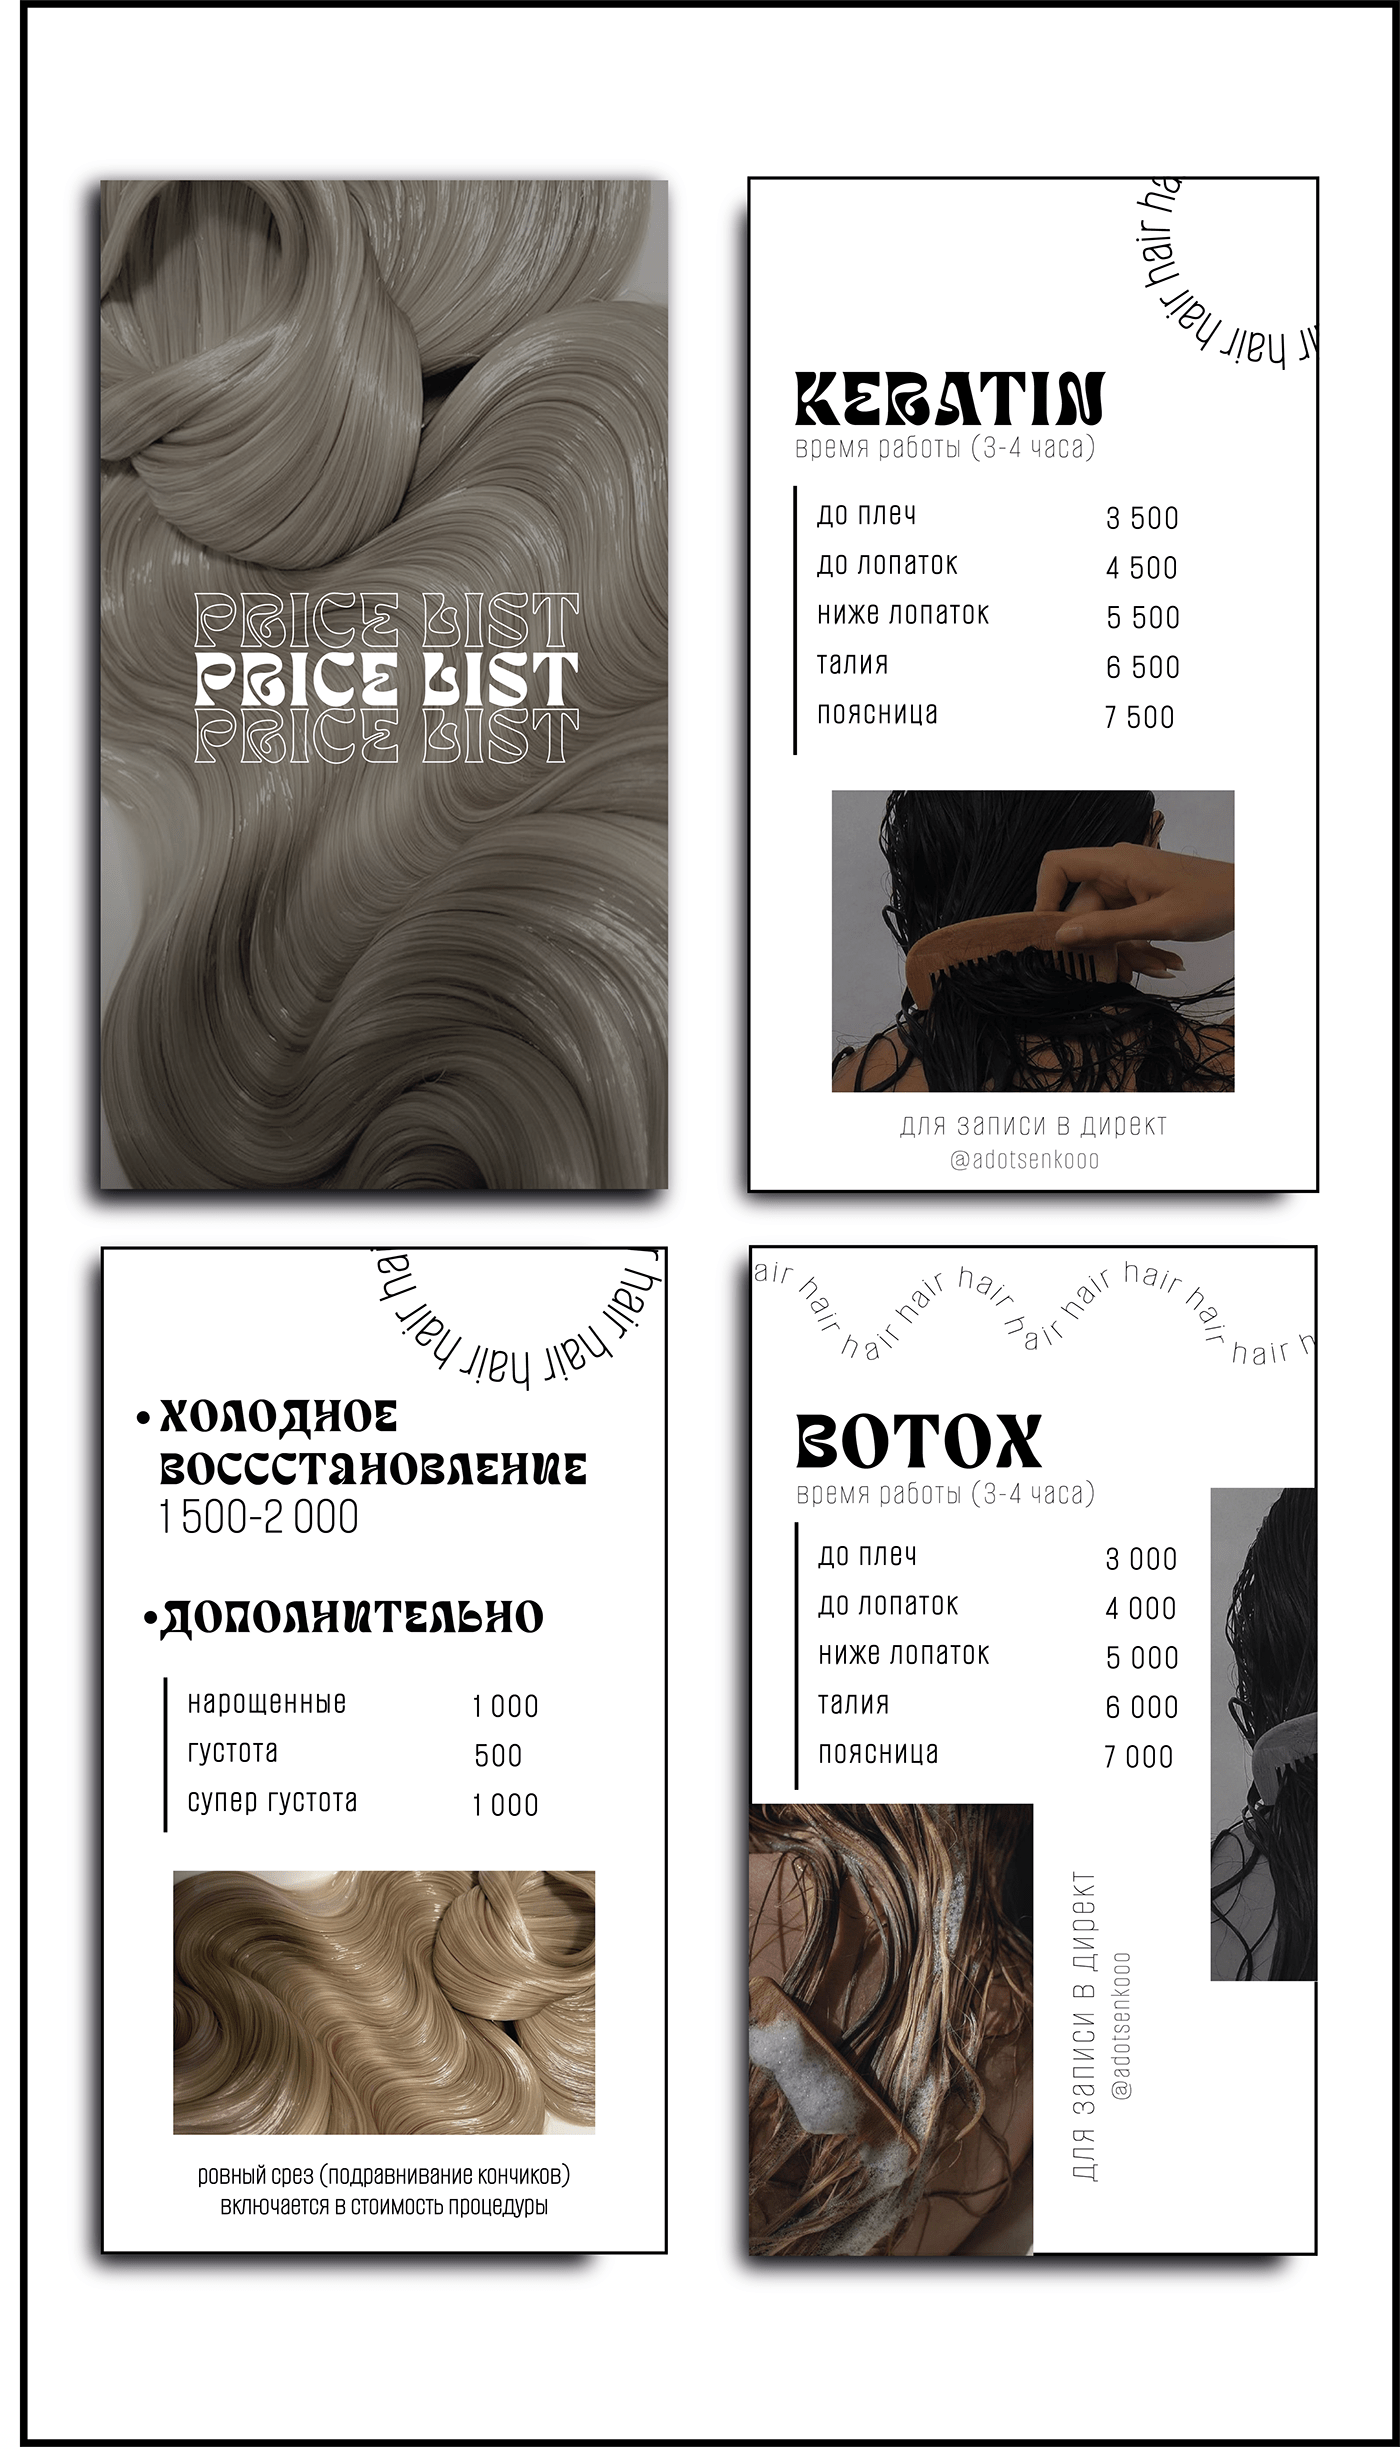 price list pricelist Dising hair волосы Прайс прайслист